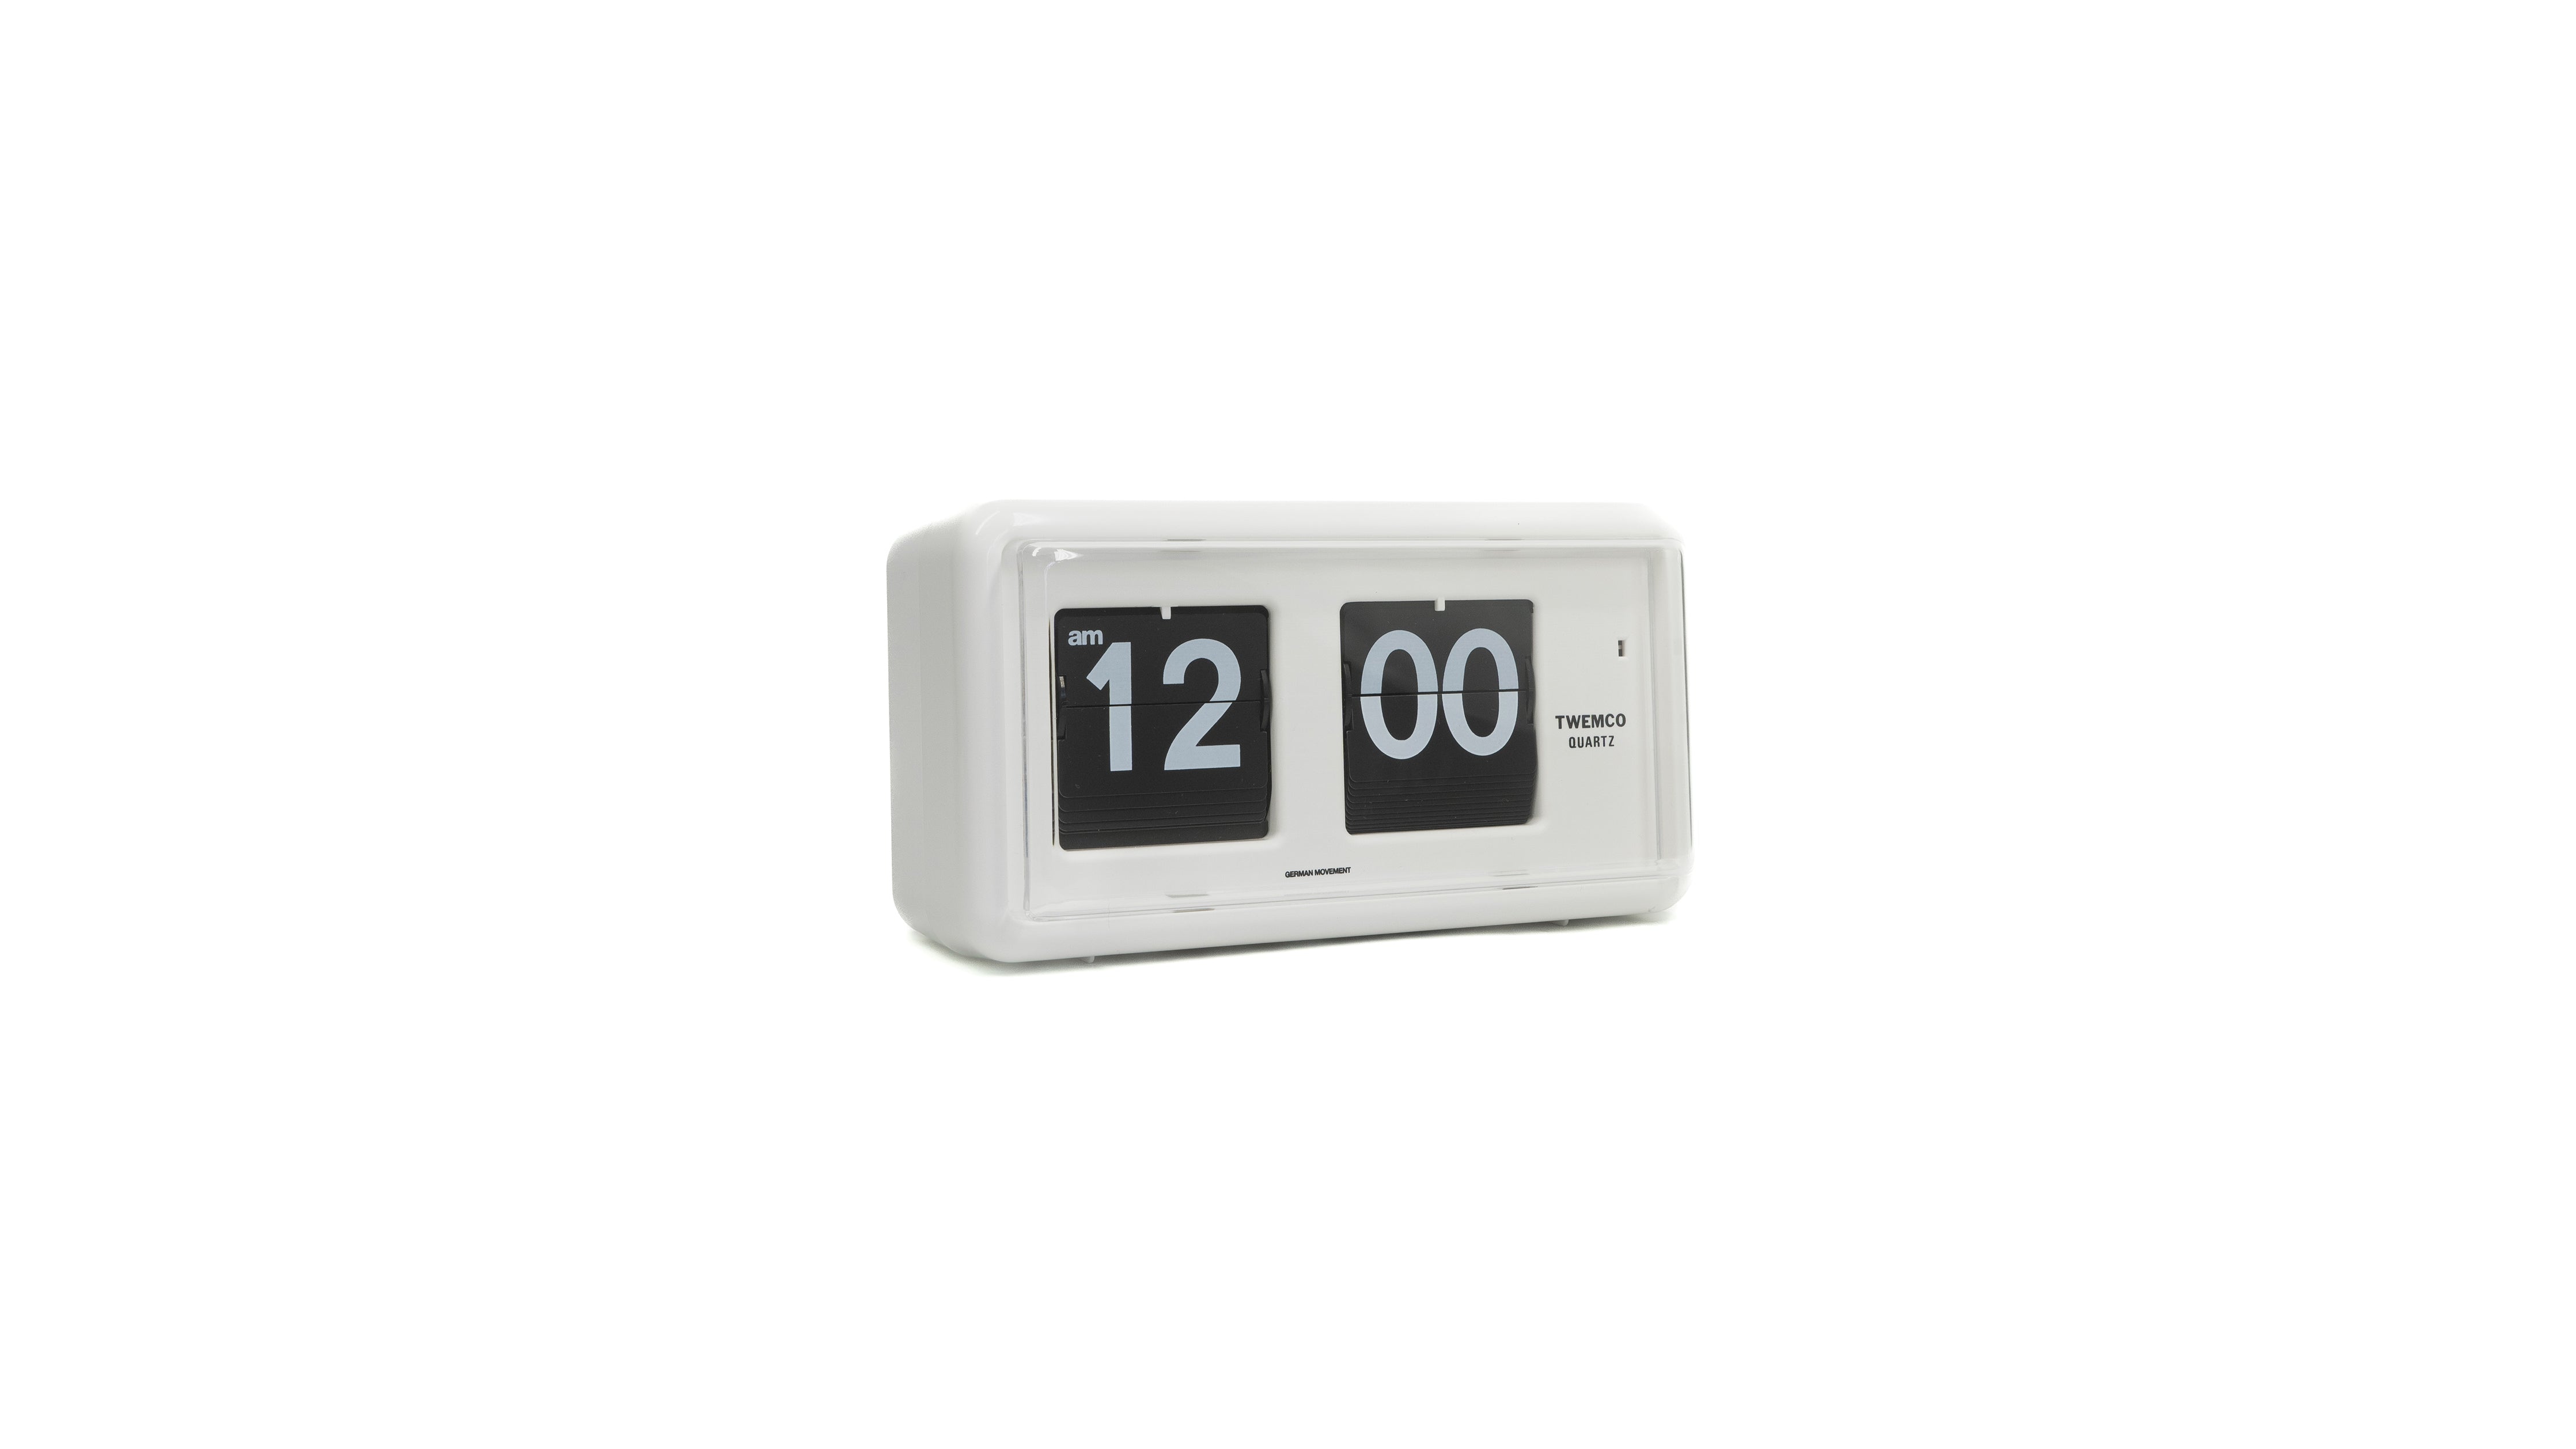 TWEMCO® Flip Clock Qt-30